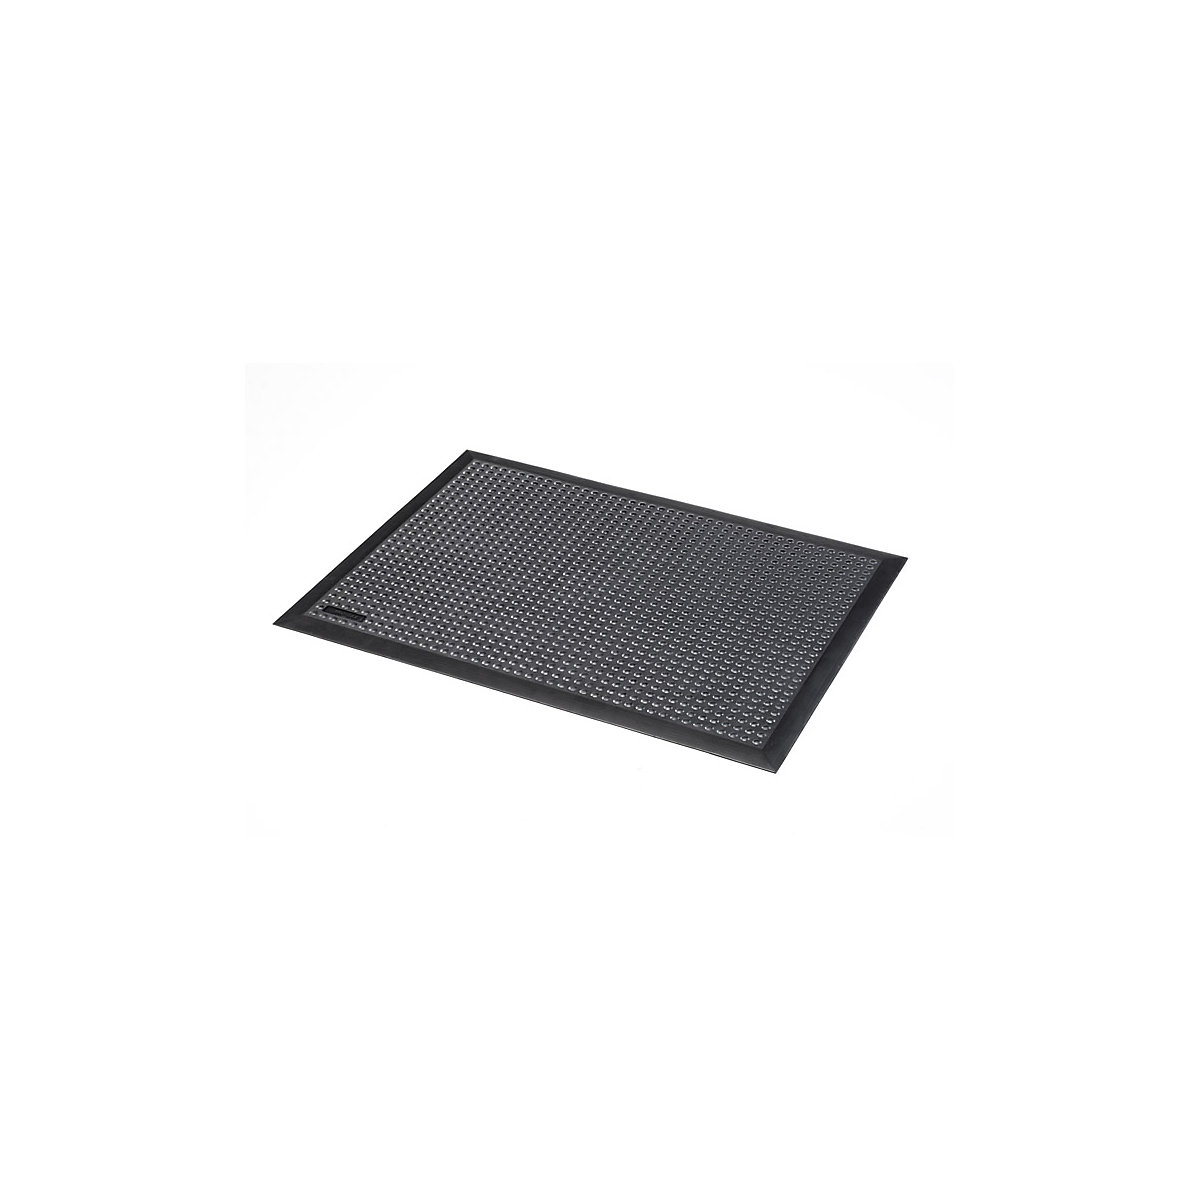 Skystep studded ESD workstation matting – NOTRAX, black, LxWxH 1500 x 900 x 13 mm-4